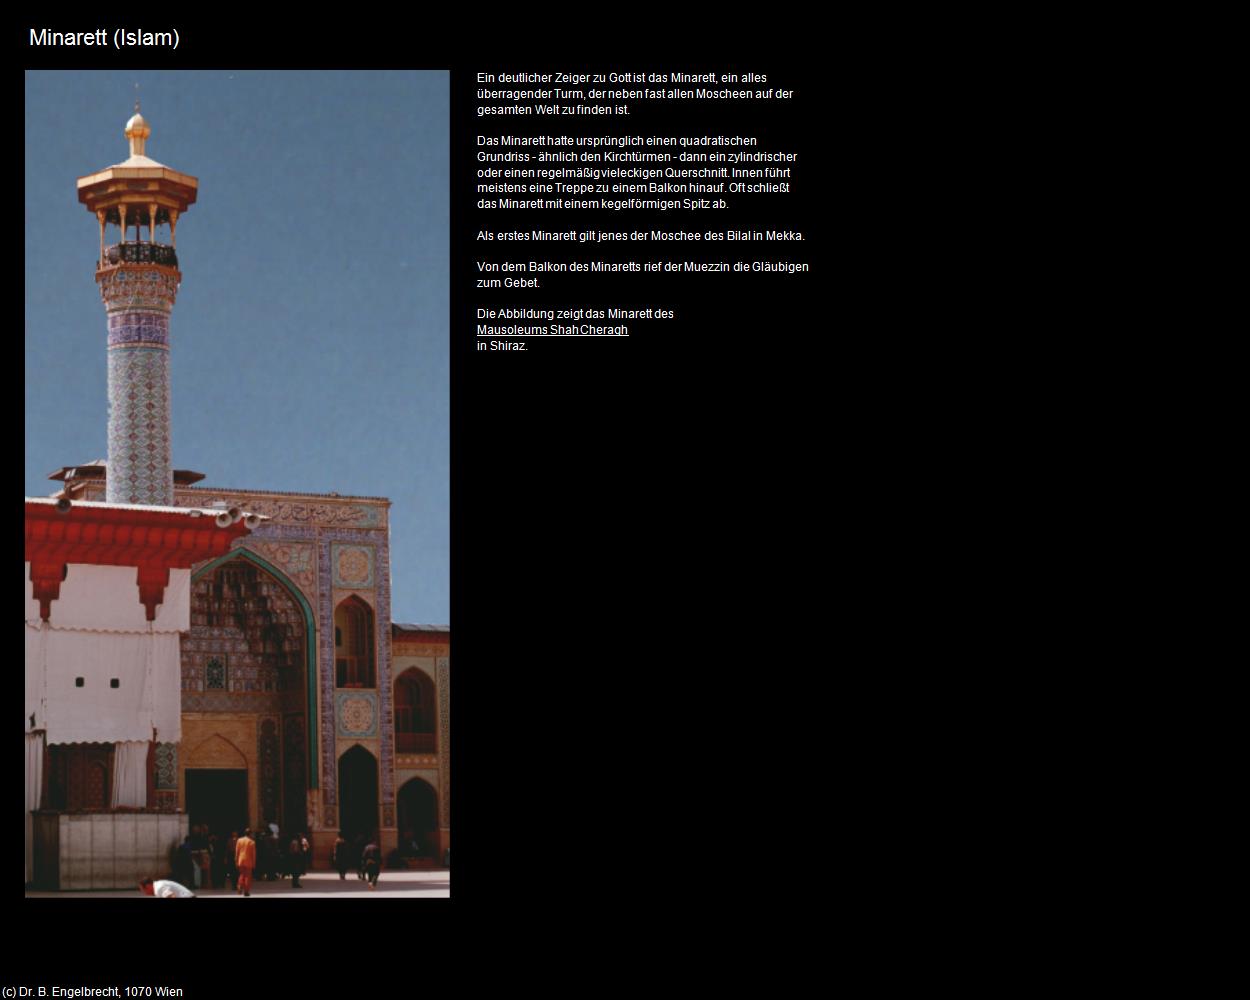 Minarett (IRAN-Religion II - Islam) in Iran(c)B.Engelbrecht